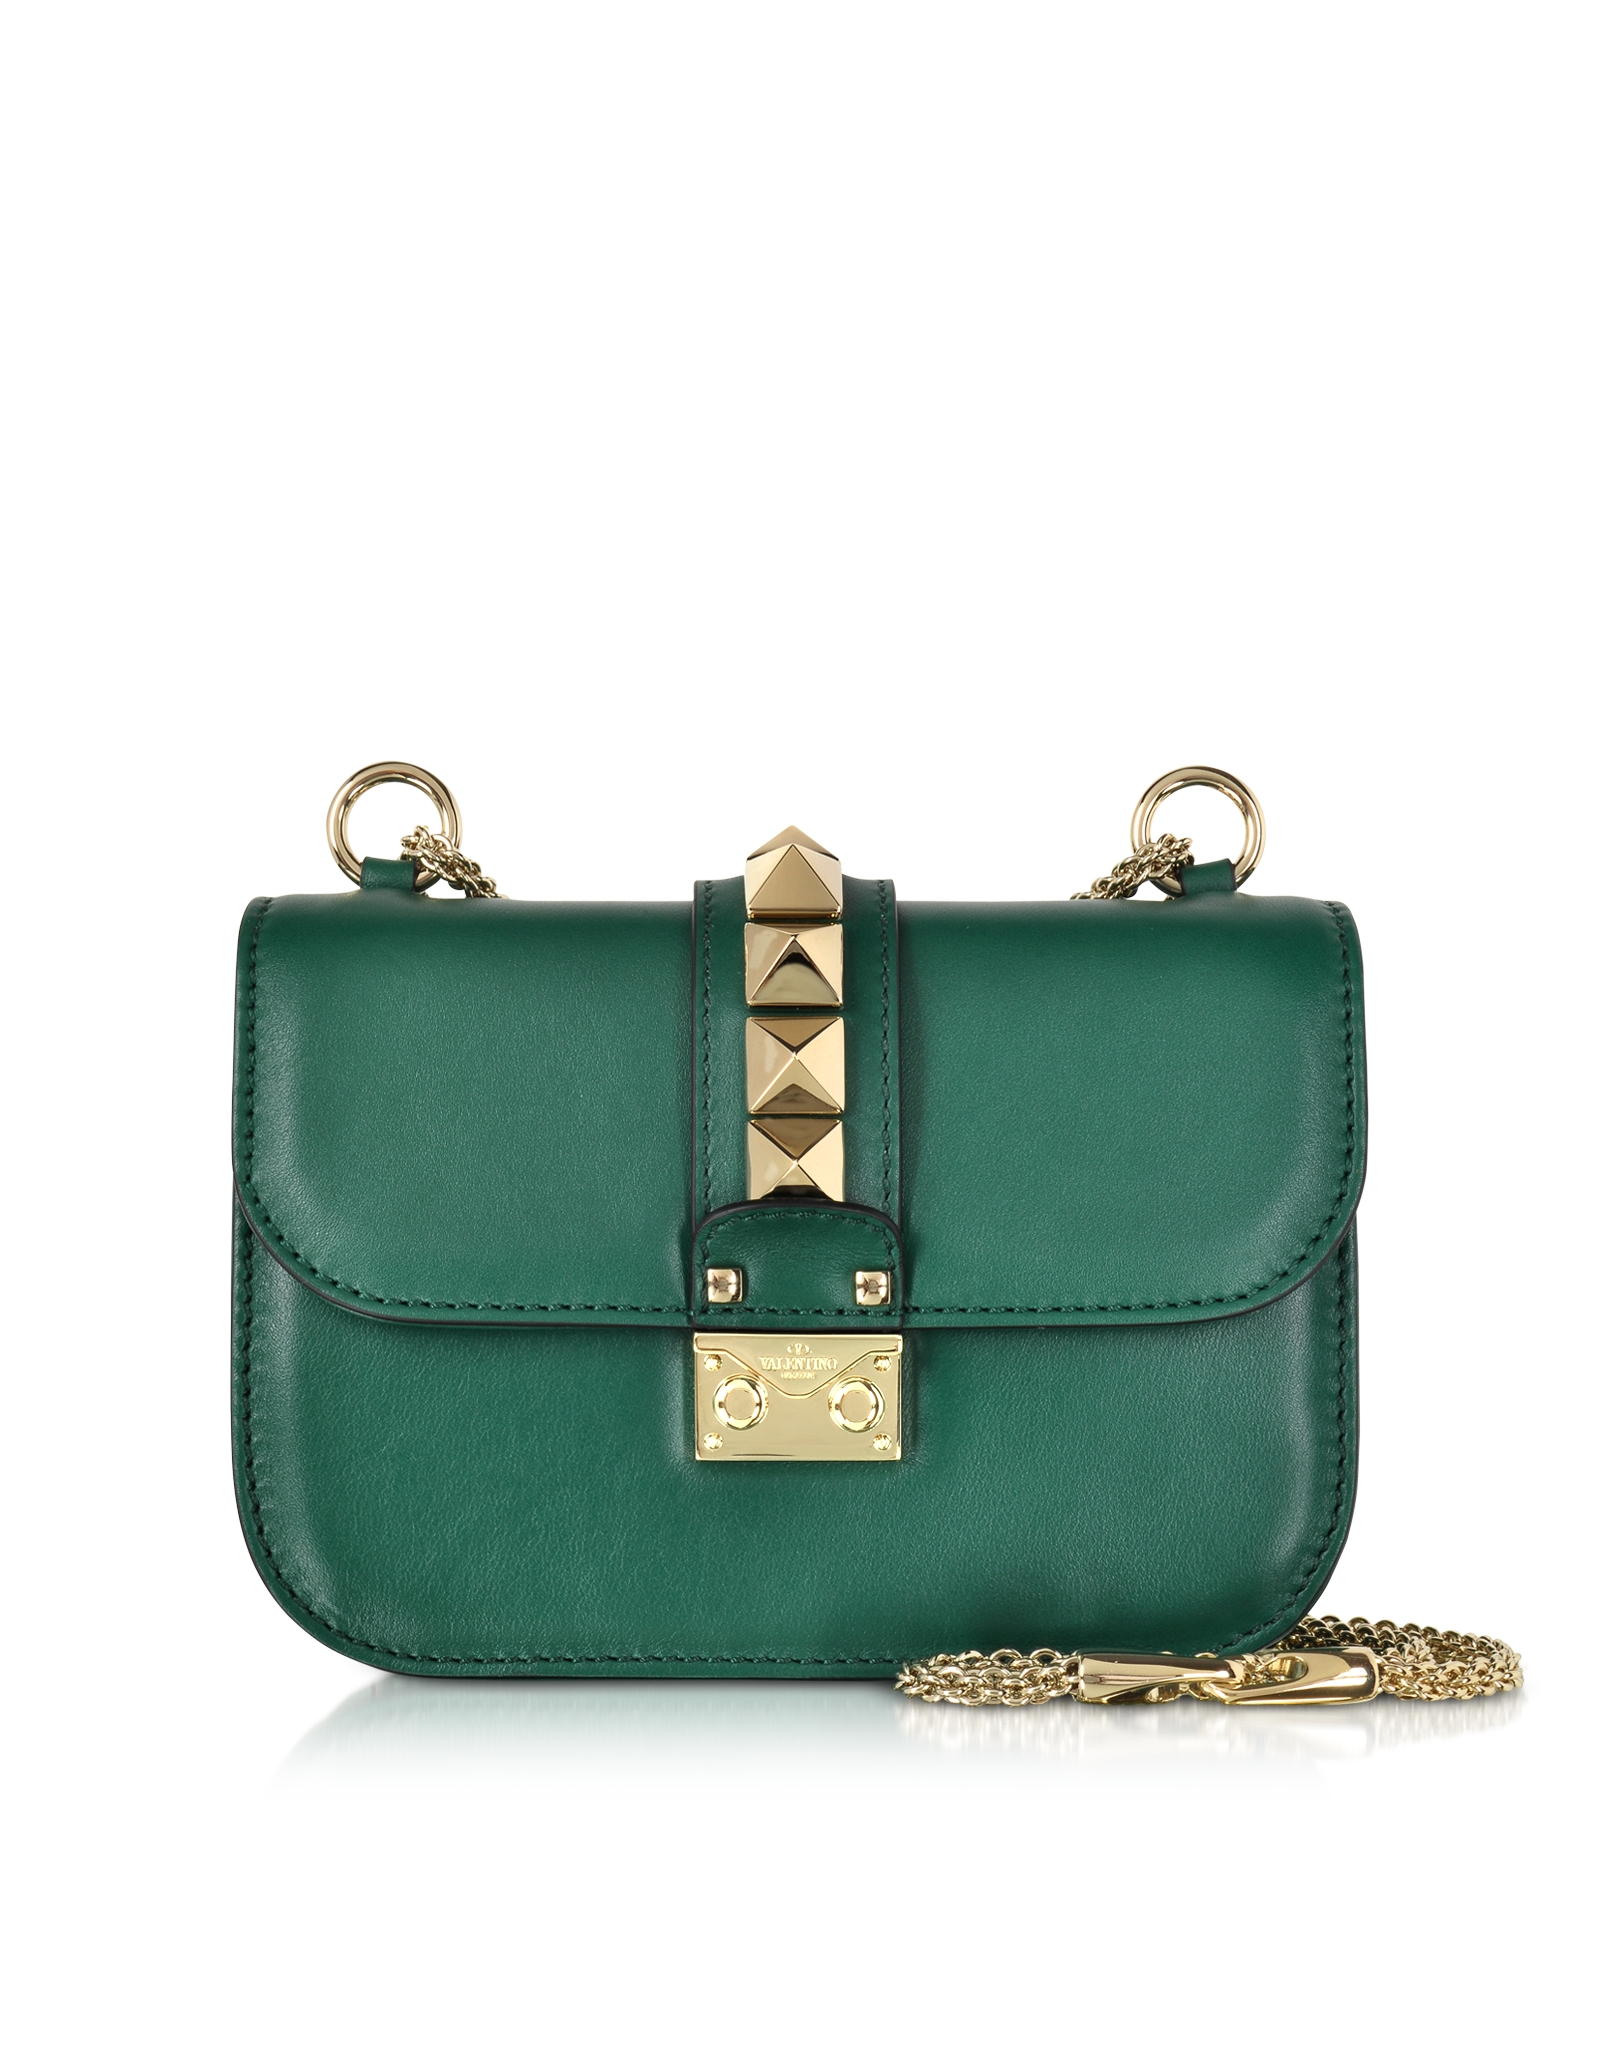 Lyst - Valentino Smeraldo Green Leather Shoulder Bag in Green